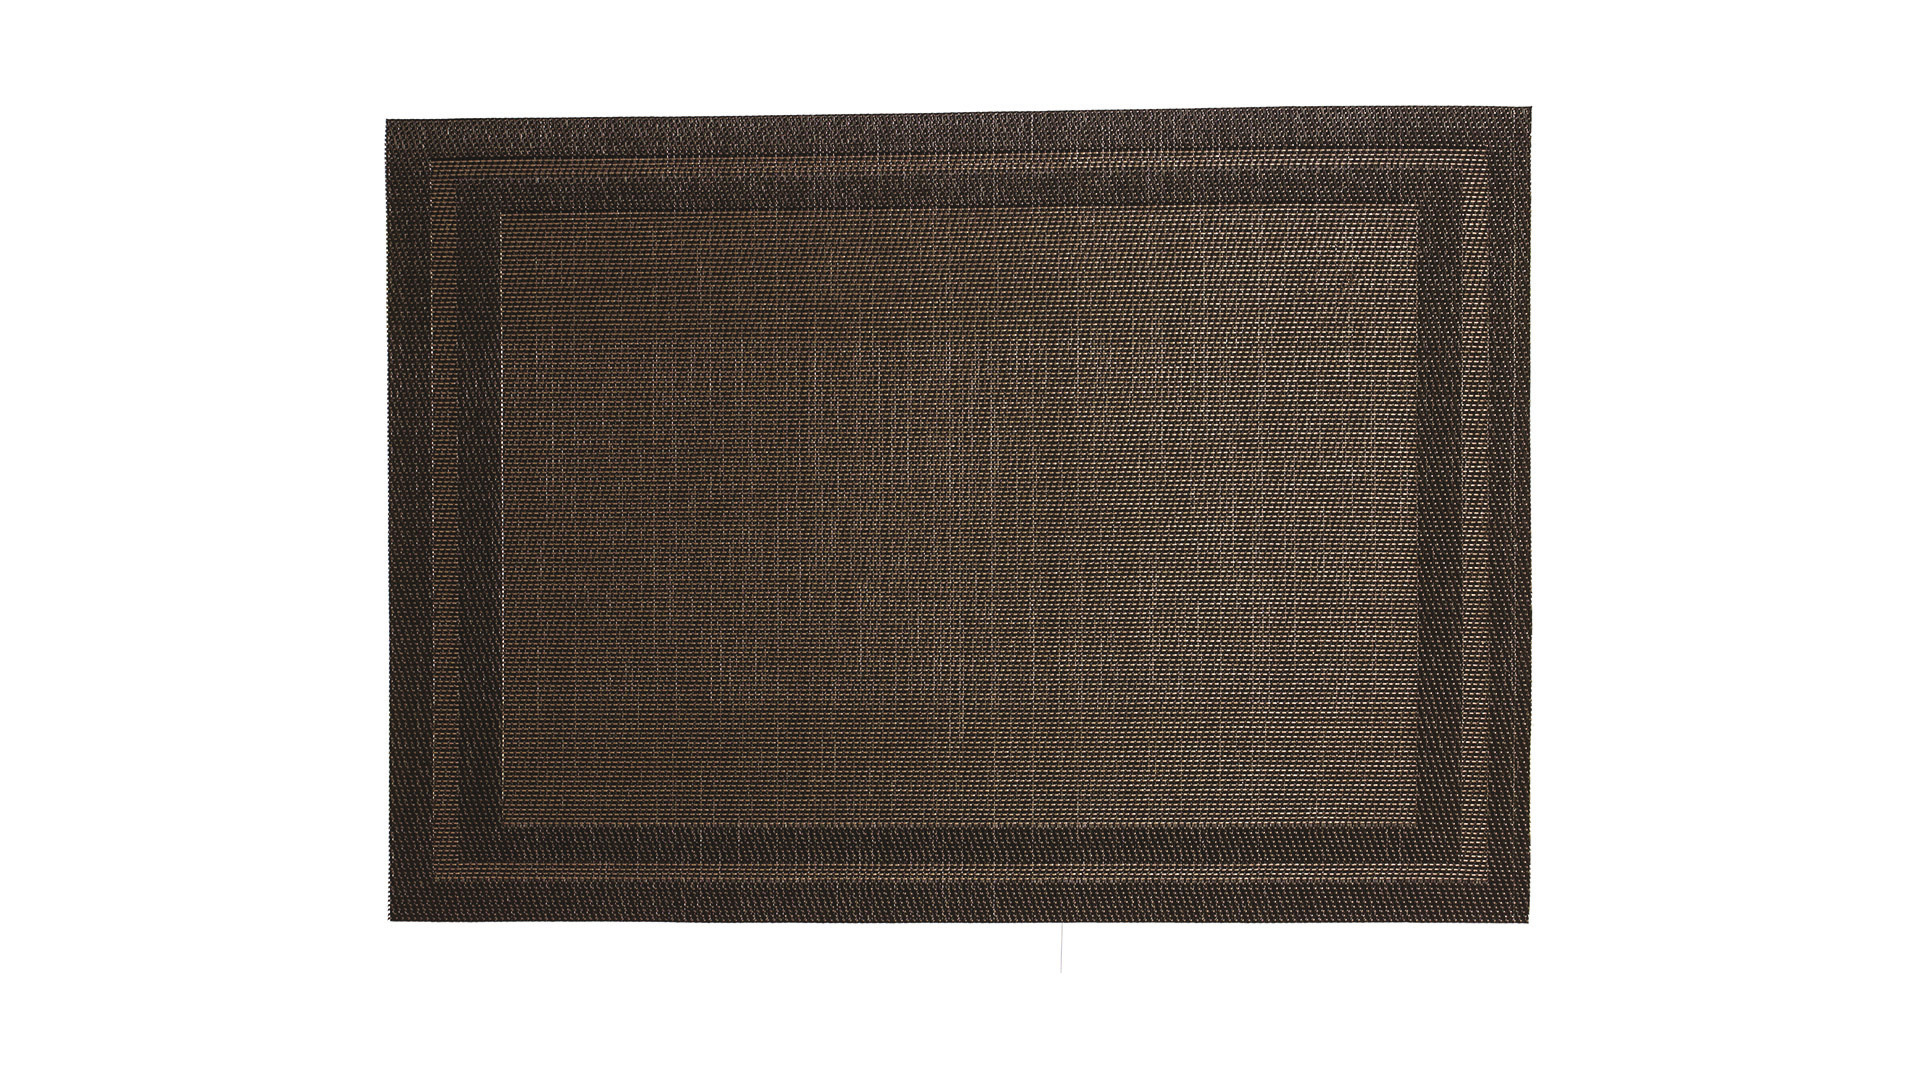 Салфетка подстановочная Abert Color Style Рамка 45х30 см, коричневая